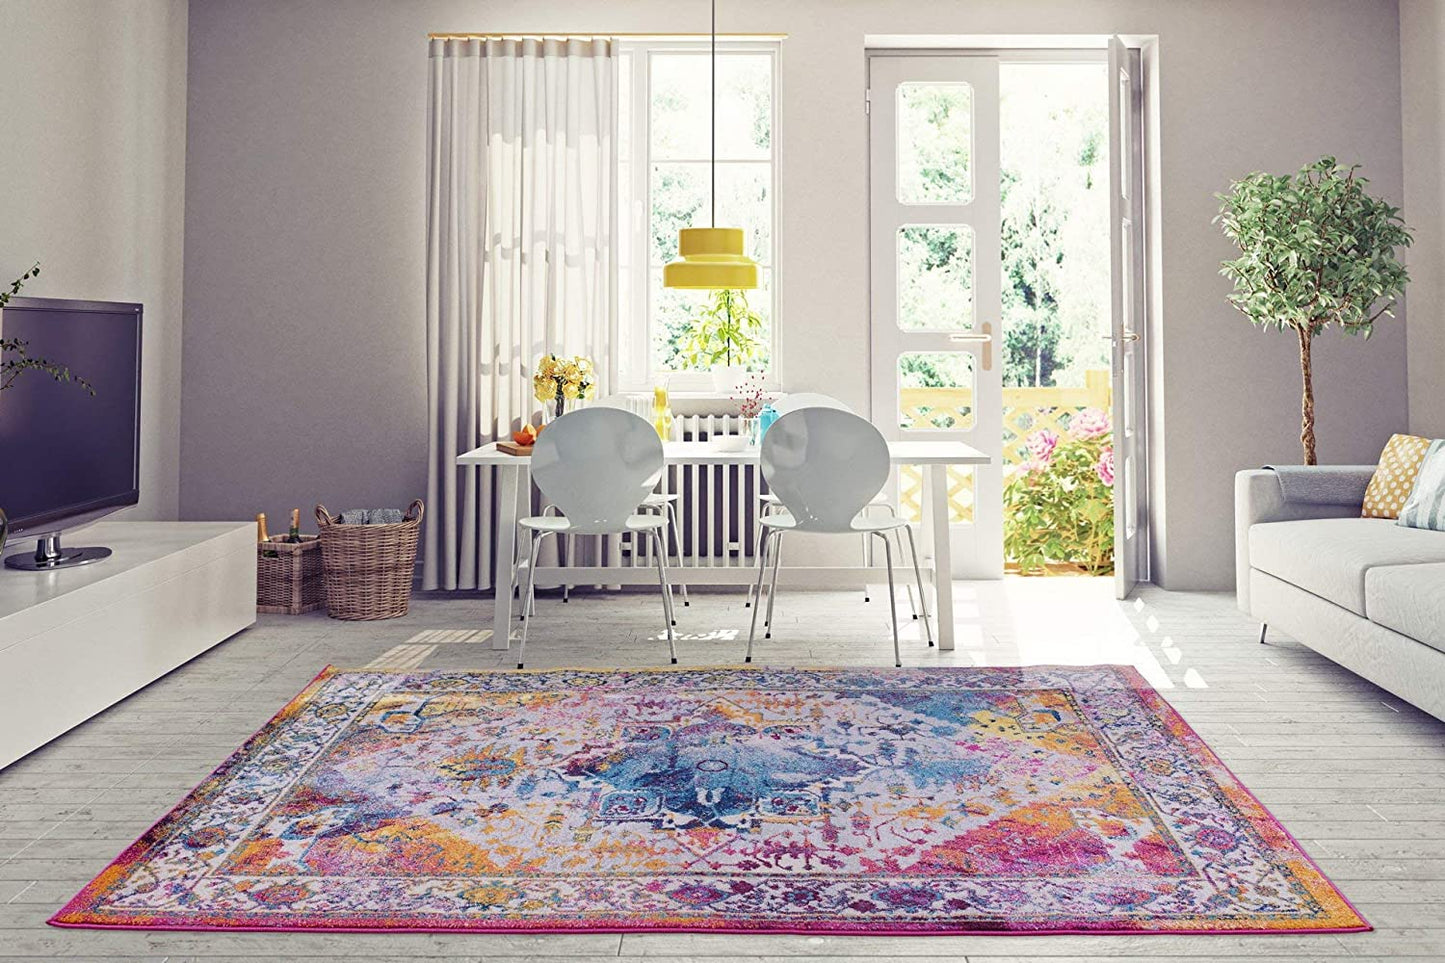 Sultan Multicolor Area Rug, Living Room Rug, Designer Bedroom Kitchen Dining Room Rug (4 x 6, Multi)